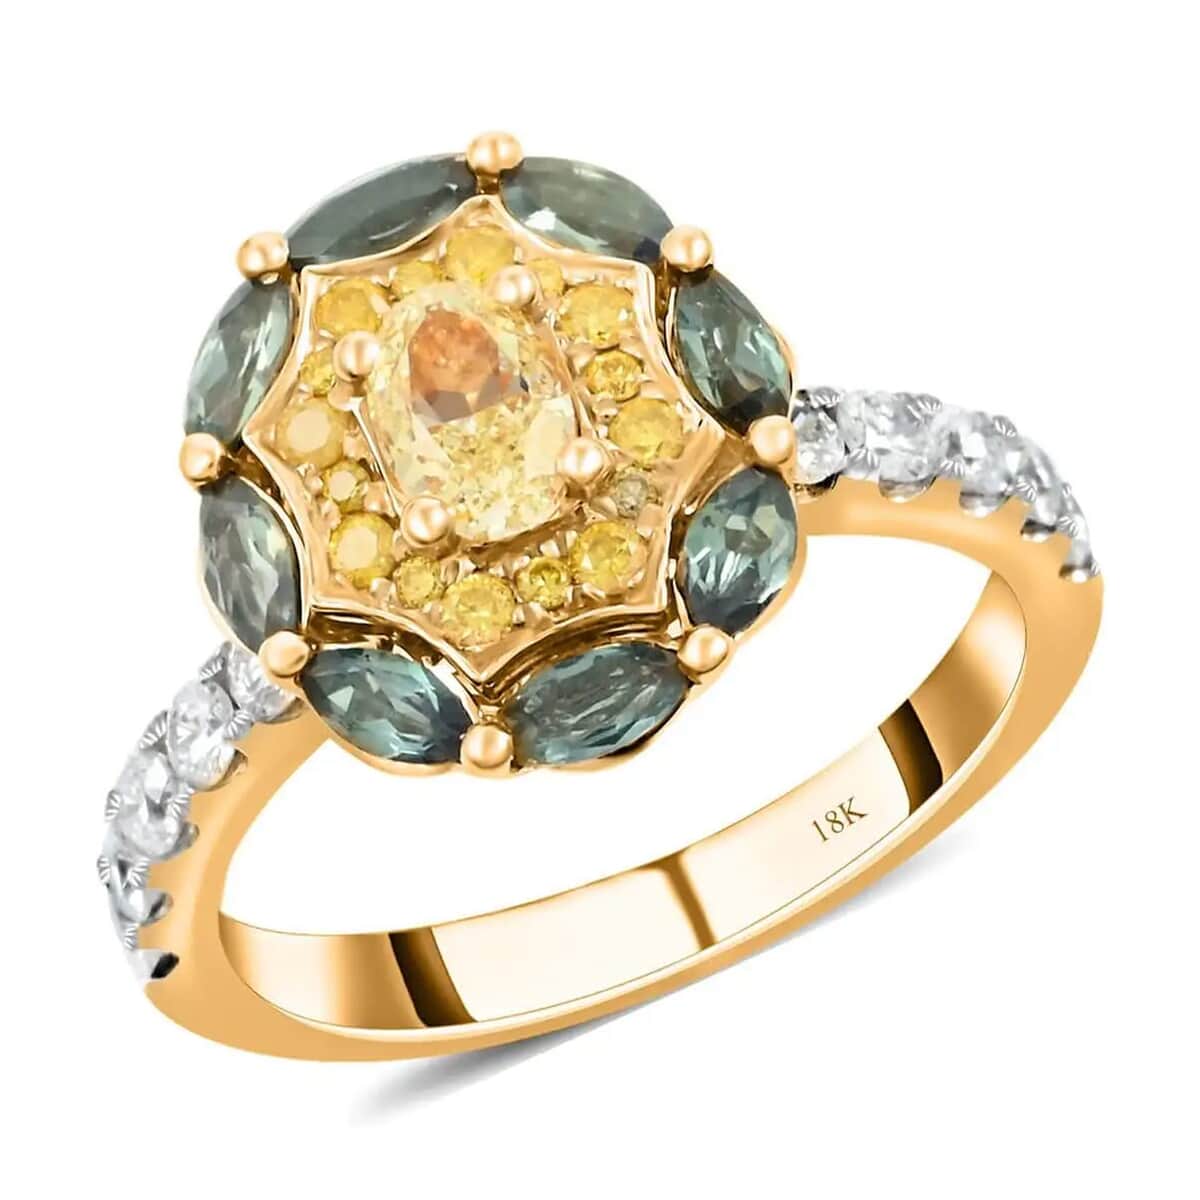 Ankur Treasure Chest Modani 18K Yellow Gold Natural Yellow and White Diamond, Narsipatnam Alexandrite Ring 5.15 Grams 1.40 ctw (Del. in 7-10 Days) image number 0